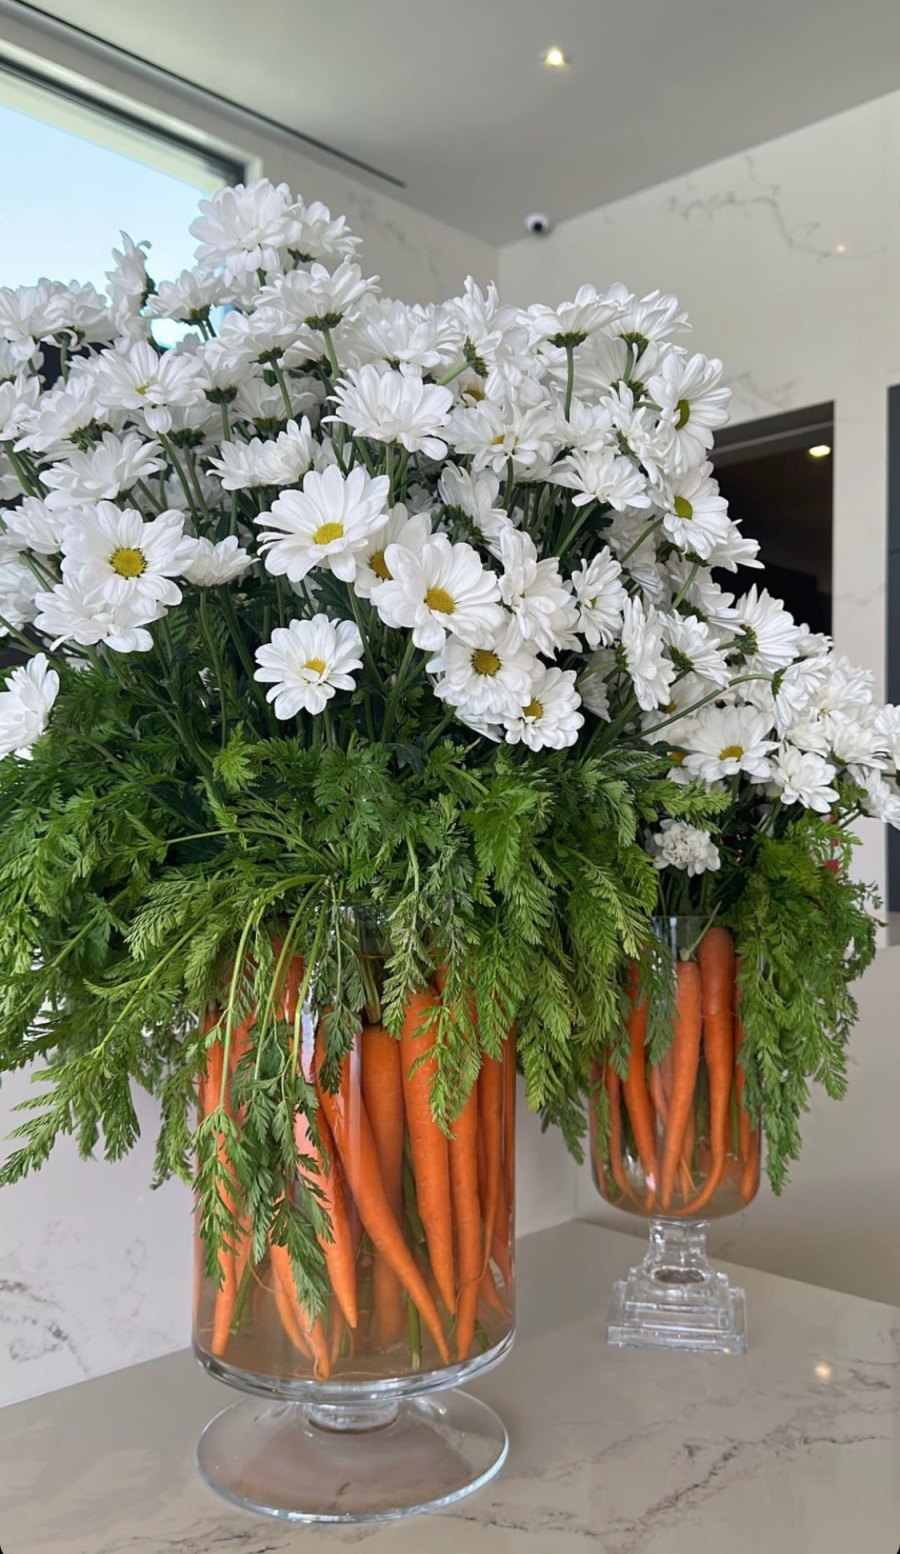 Kylie Jenner's flower/carrot display